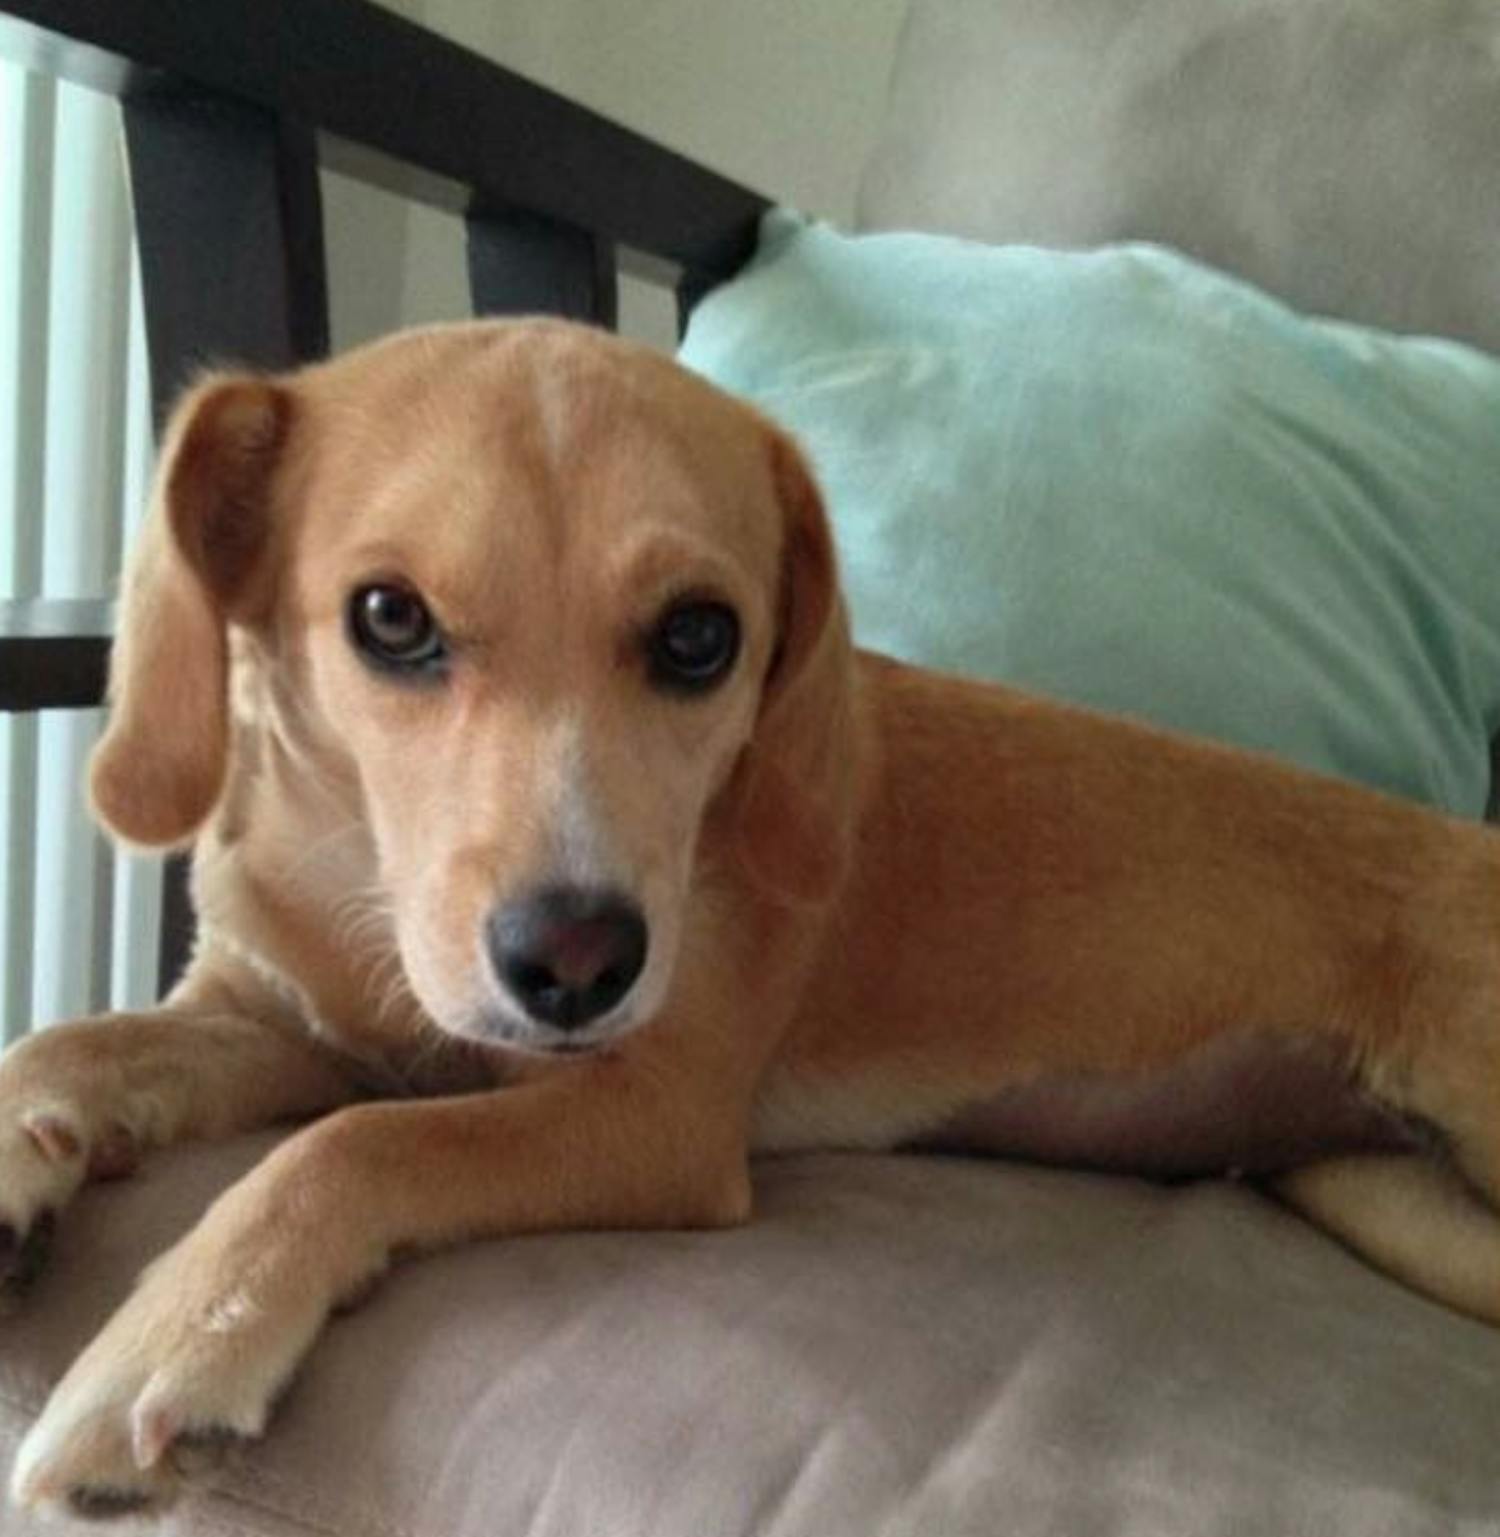 Bella, the emotional support dog killed by three pitbulls